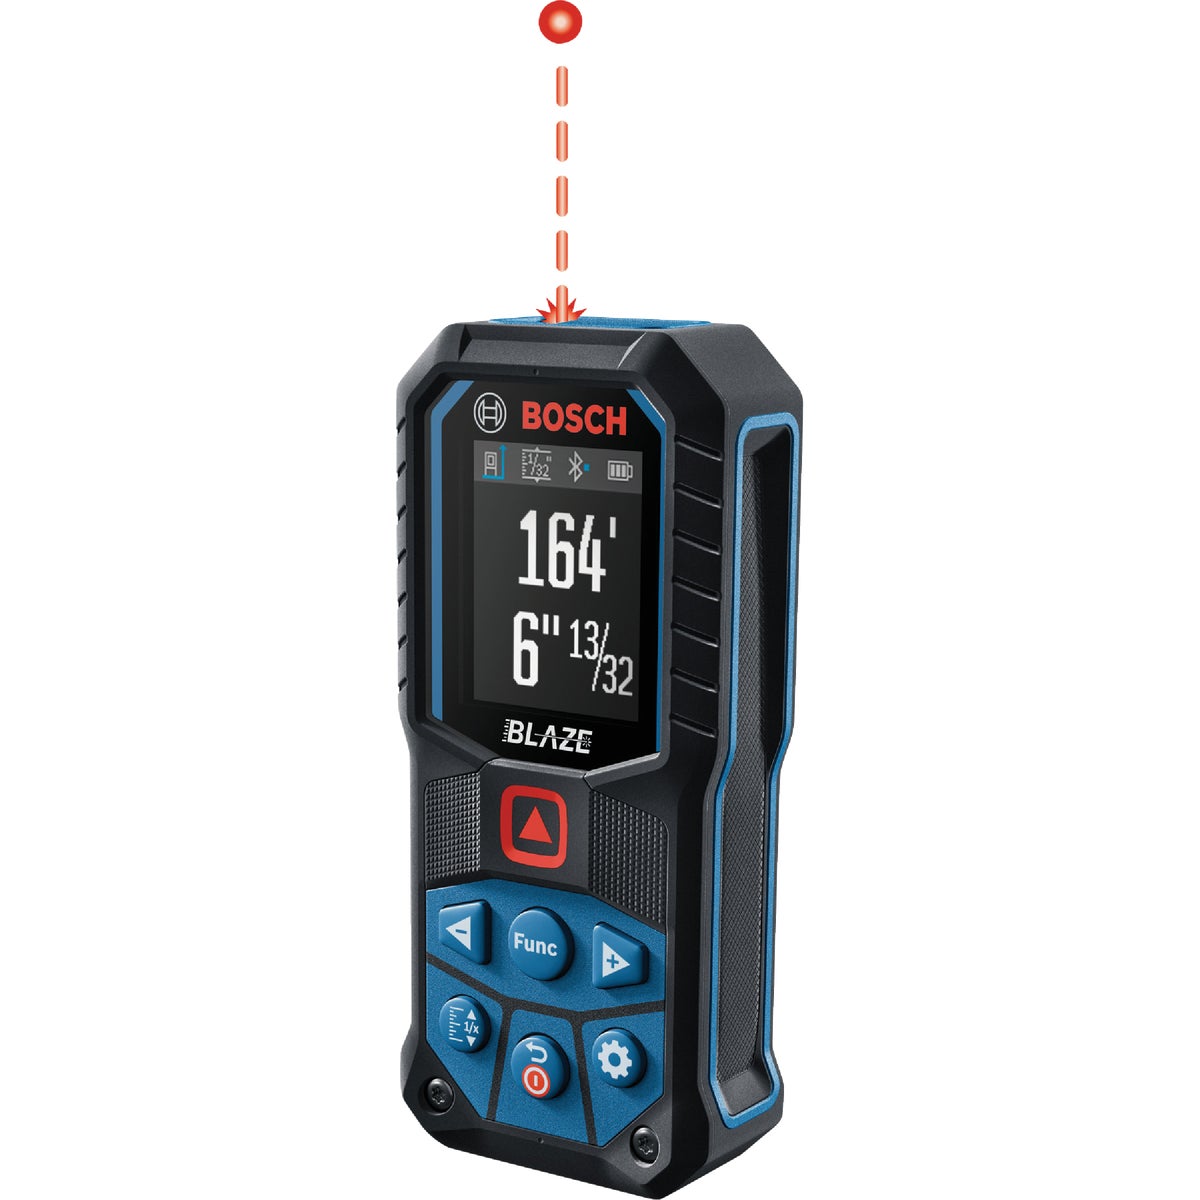 Bosch Blaze 165 Ft. Bluetooth Connected Laser Distance Measurer